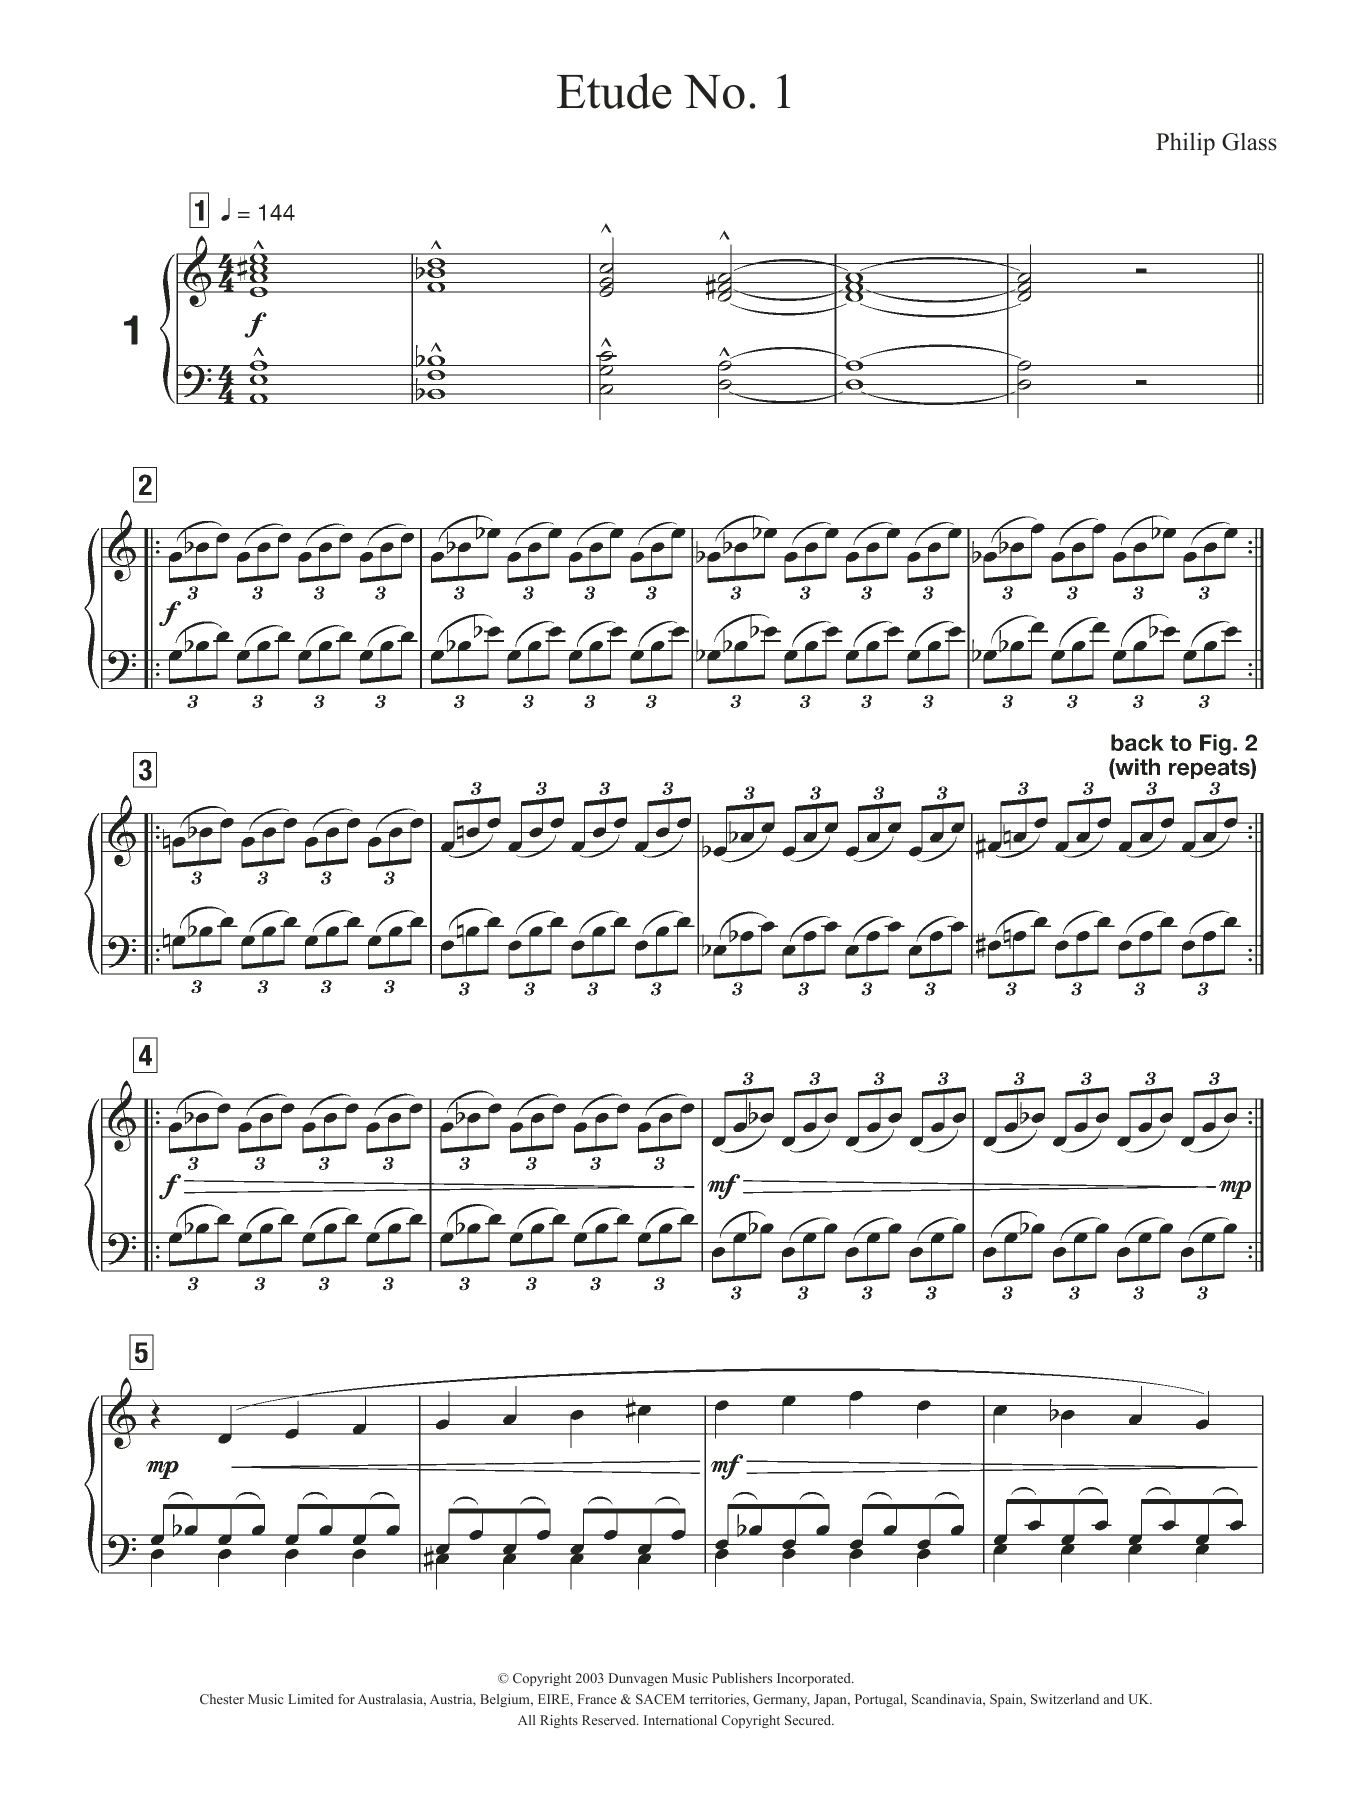 Download Philip Glass Etude No. 1 Sheet Music